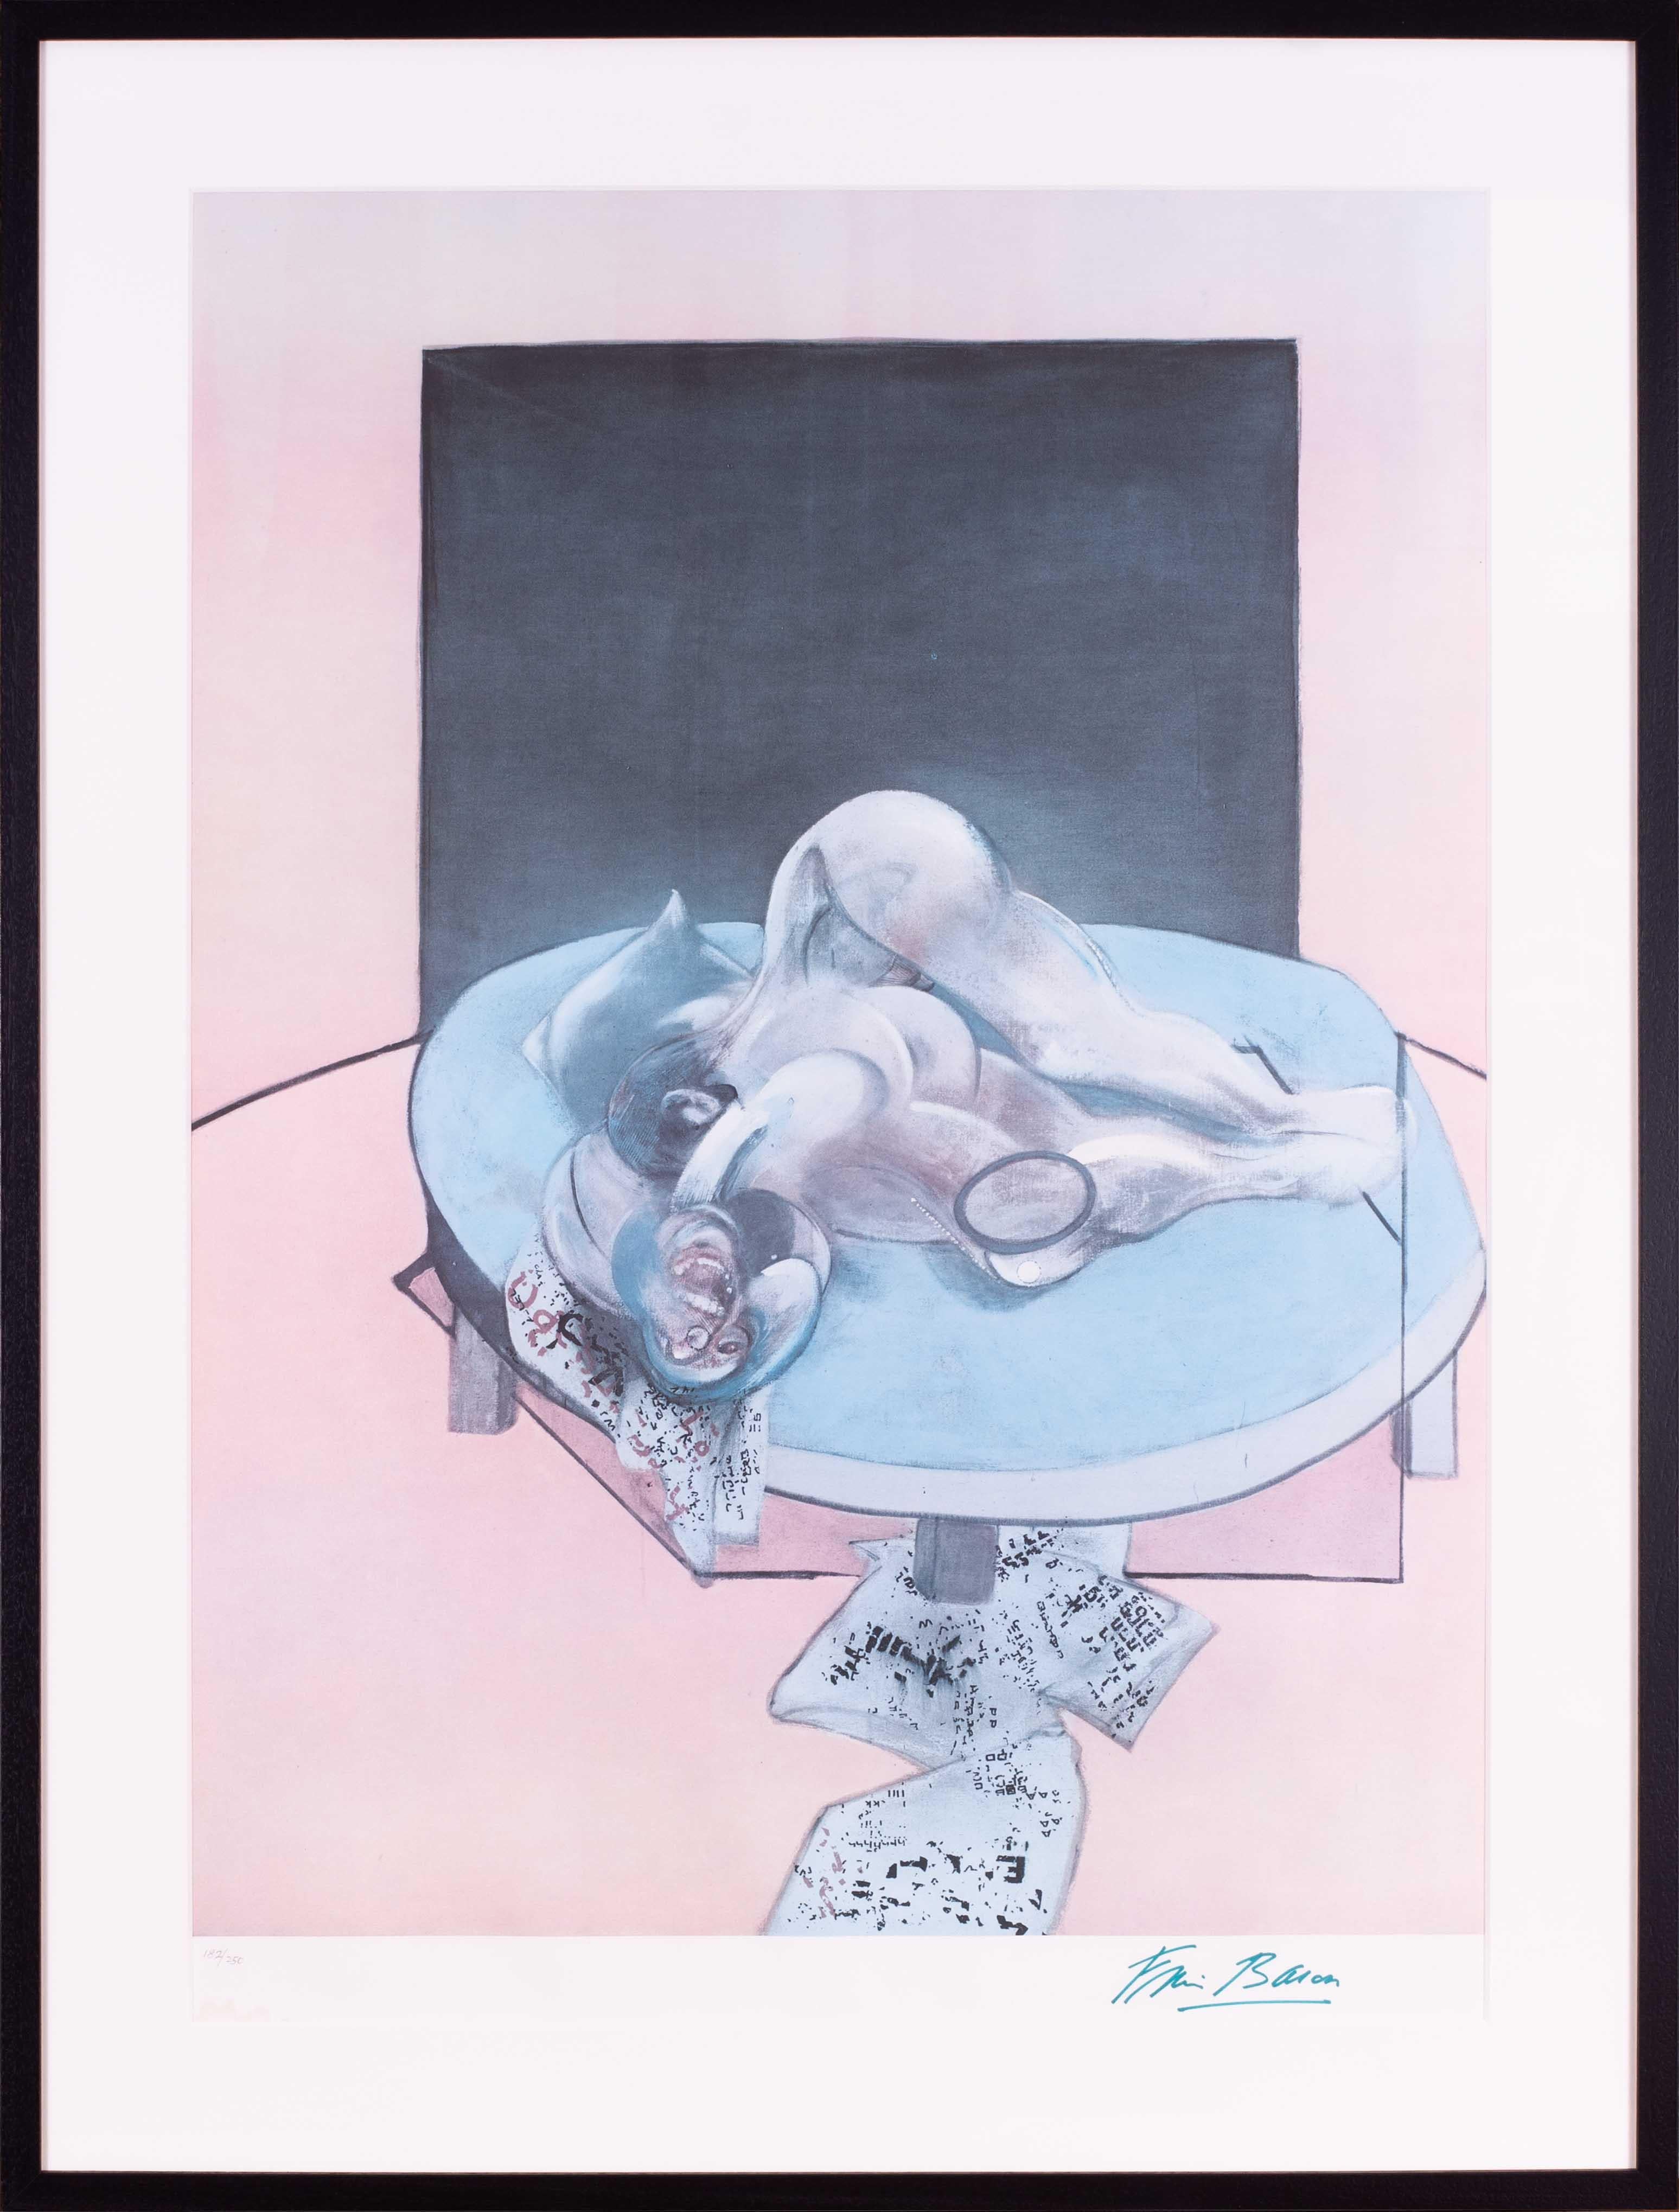 Francis Bacon, signierte 182/250 Offset-Lithographie, Studie des menschlichen Körpers, 1980